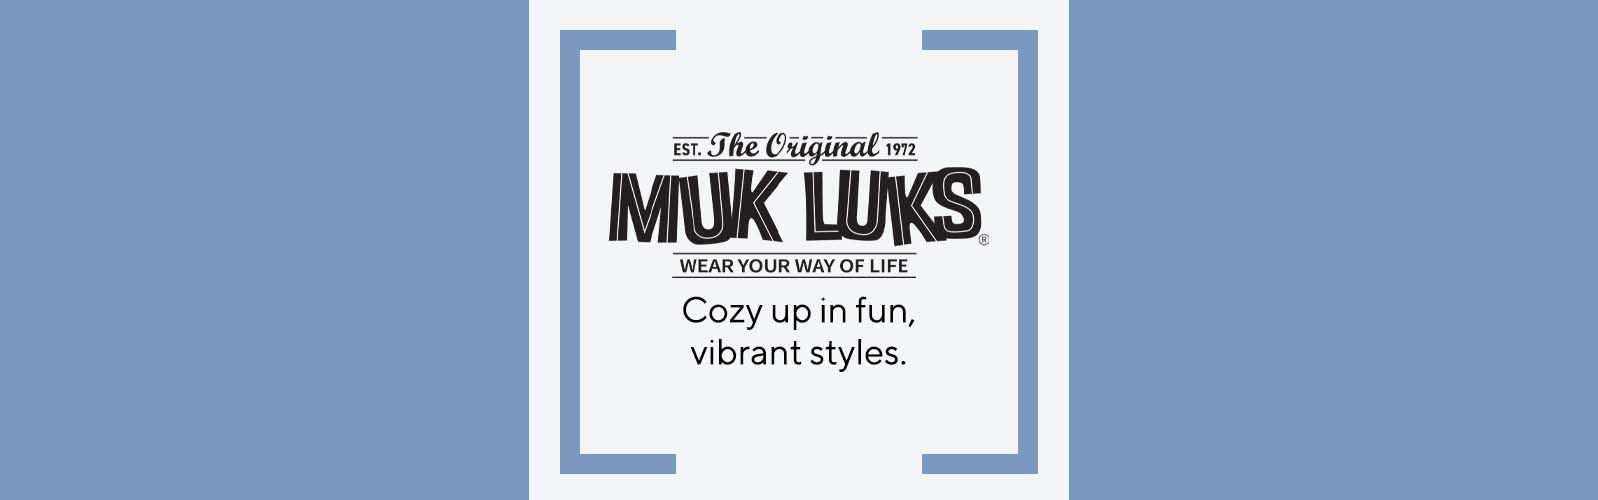 Muk Luks - Cozy up in fun, vibrant styles.